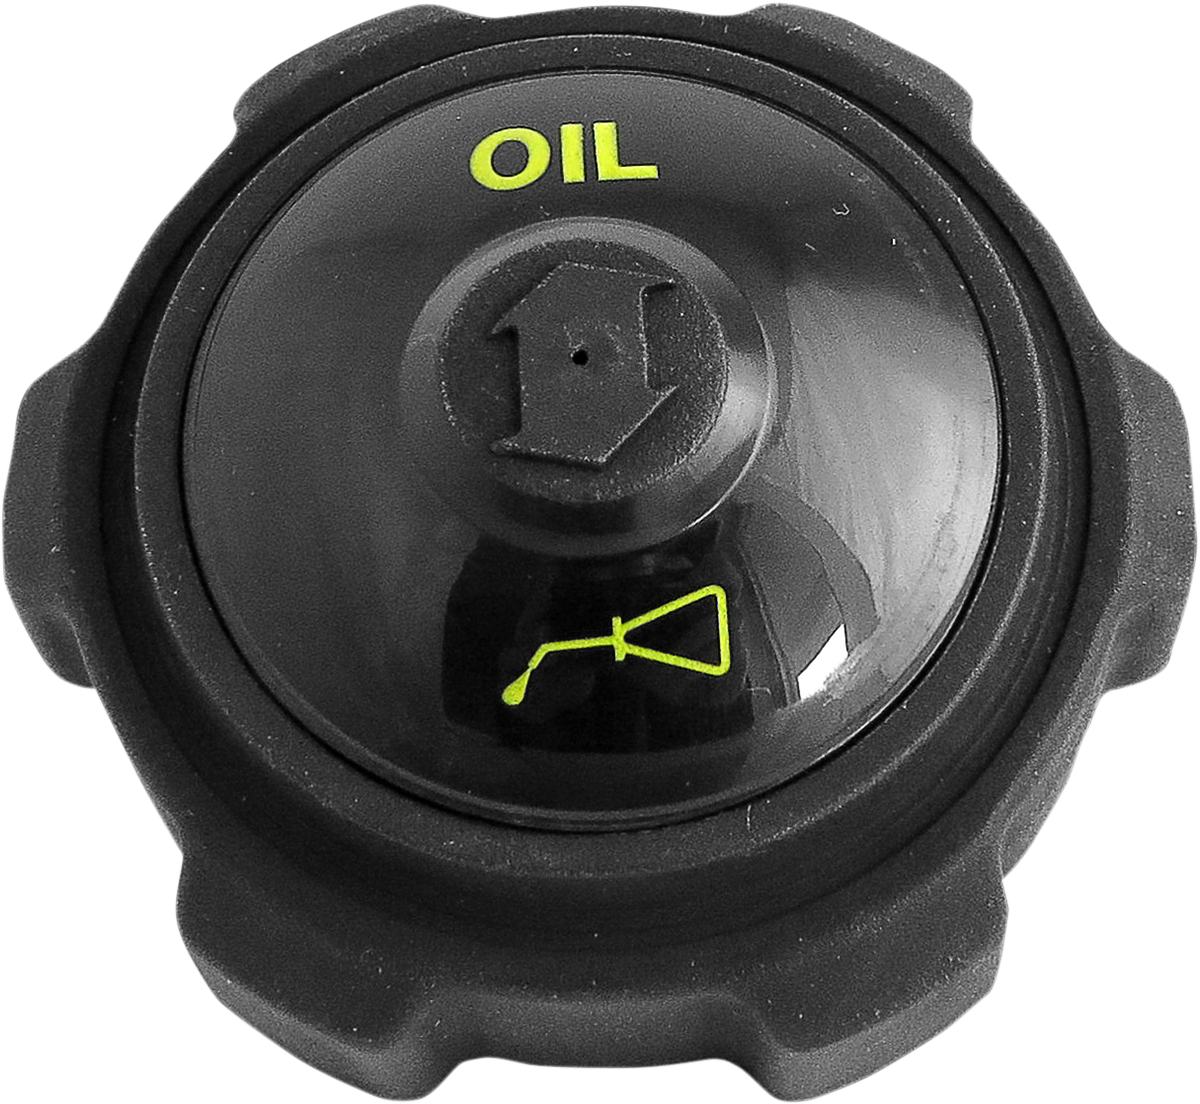 EPI Oil Cap Includes Gasket